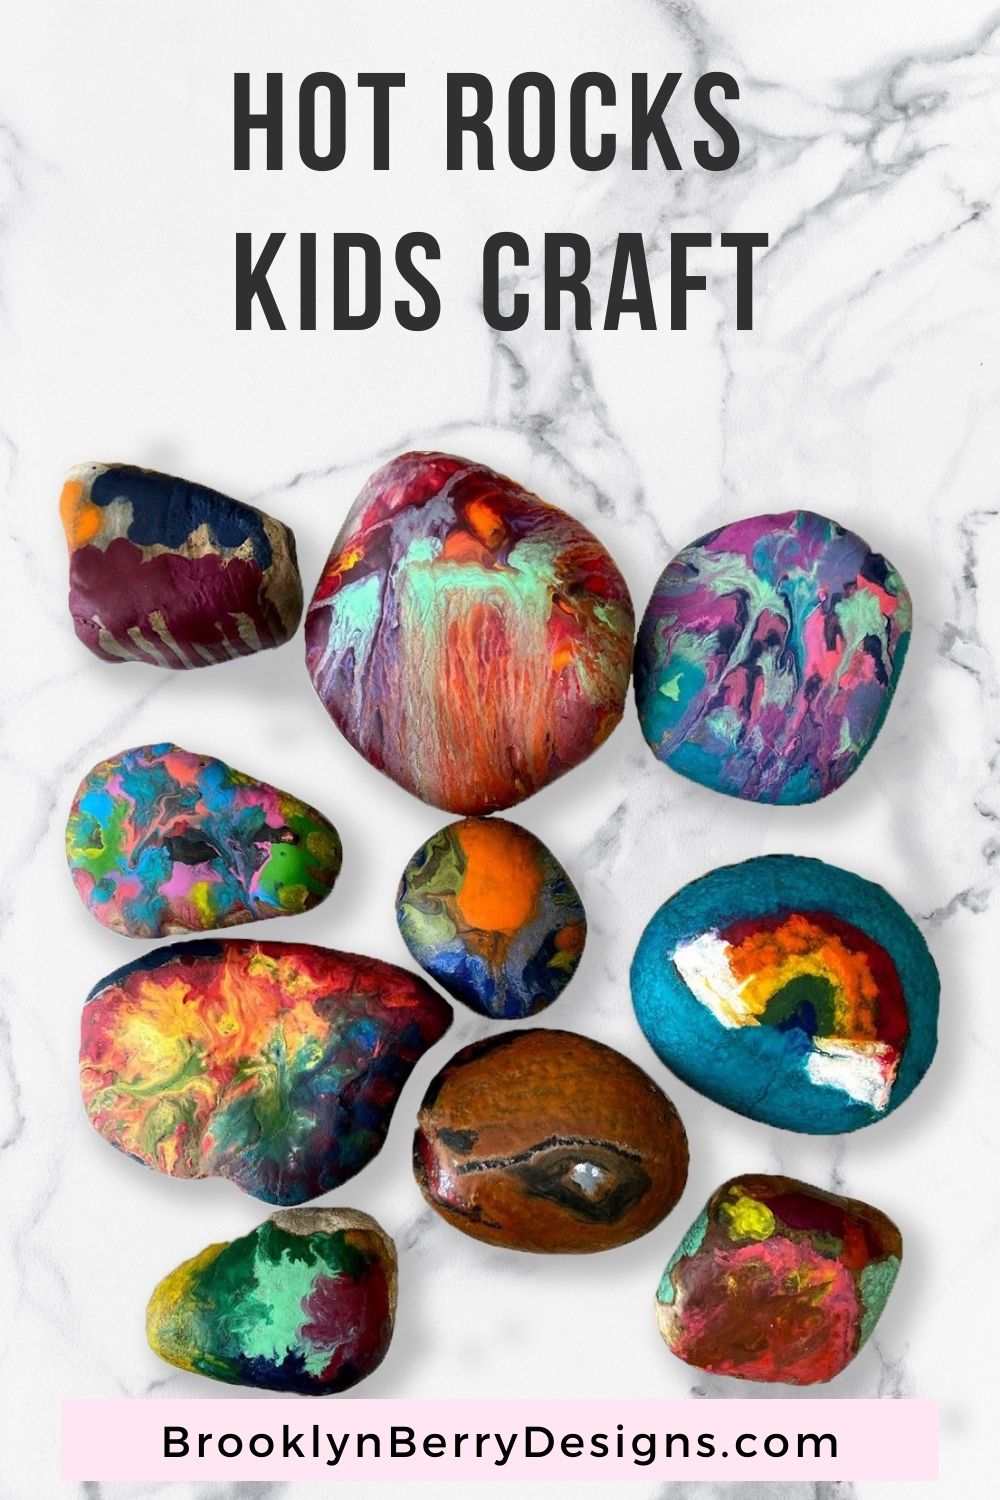 Hot Rocks Kids Craft - Brooklyn Berry Designs